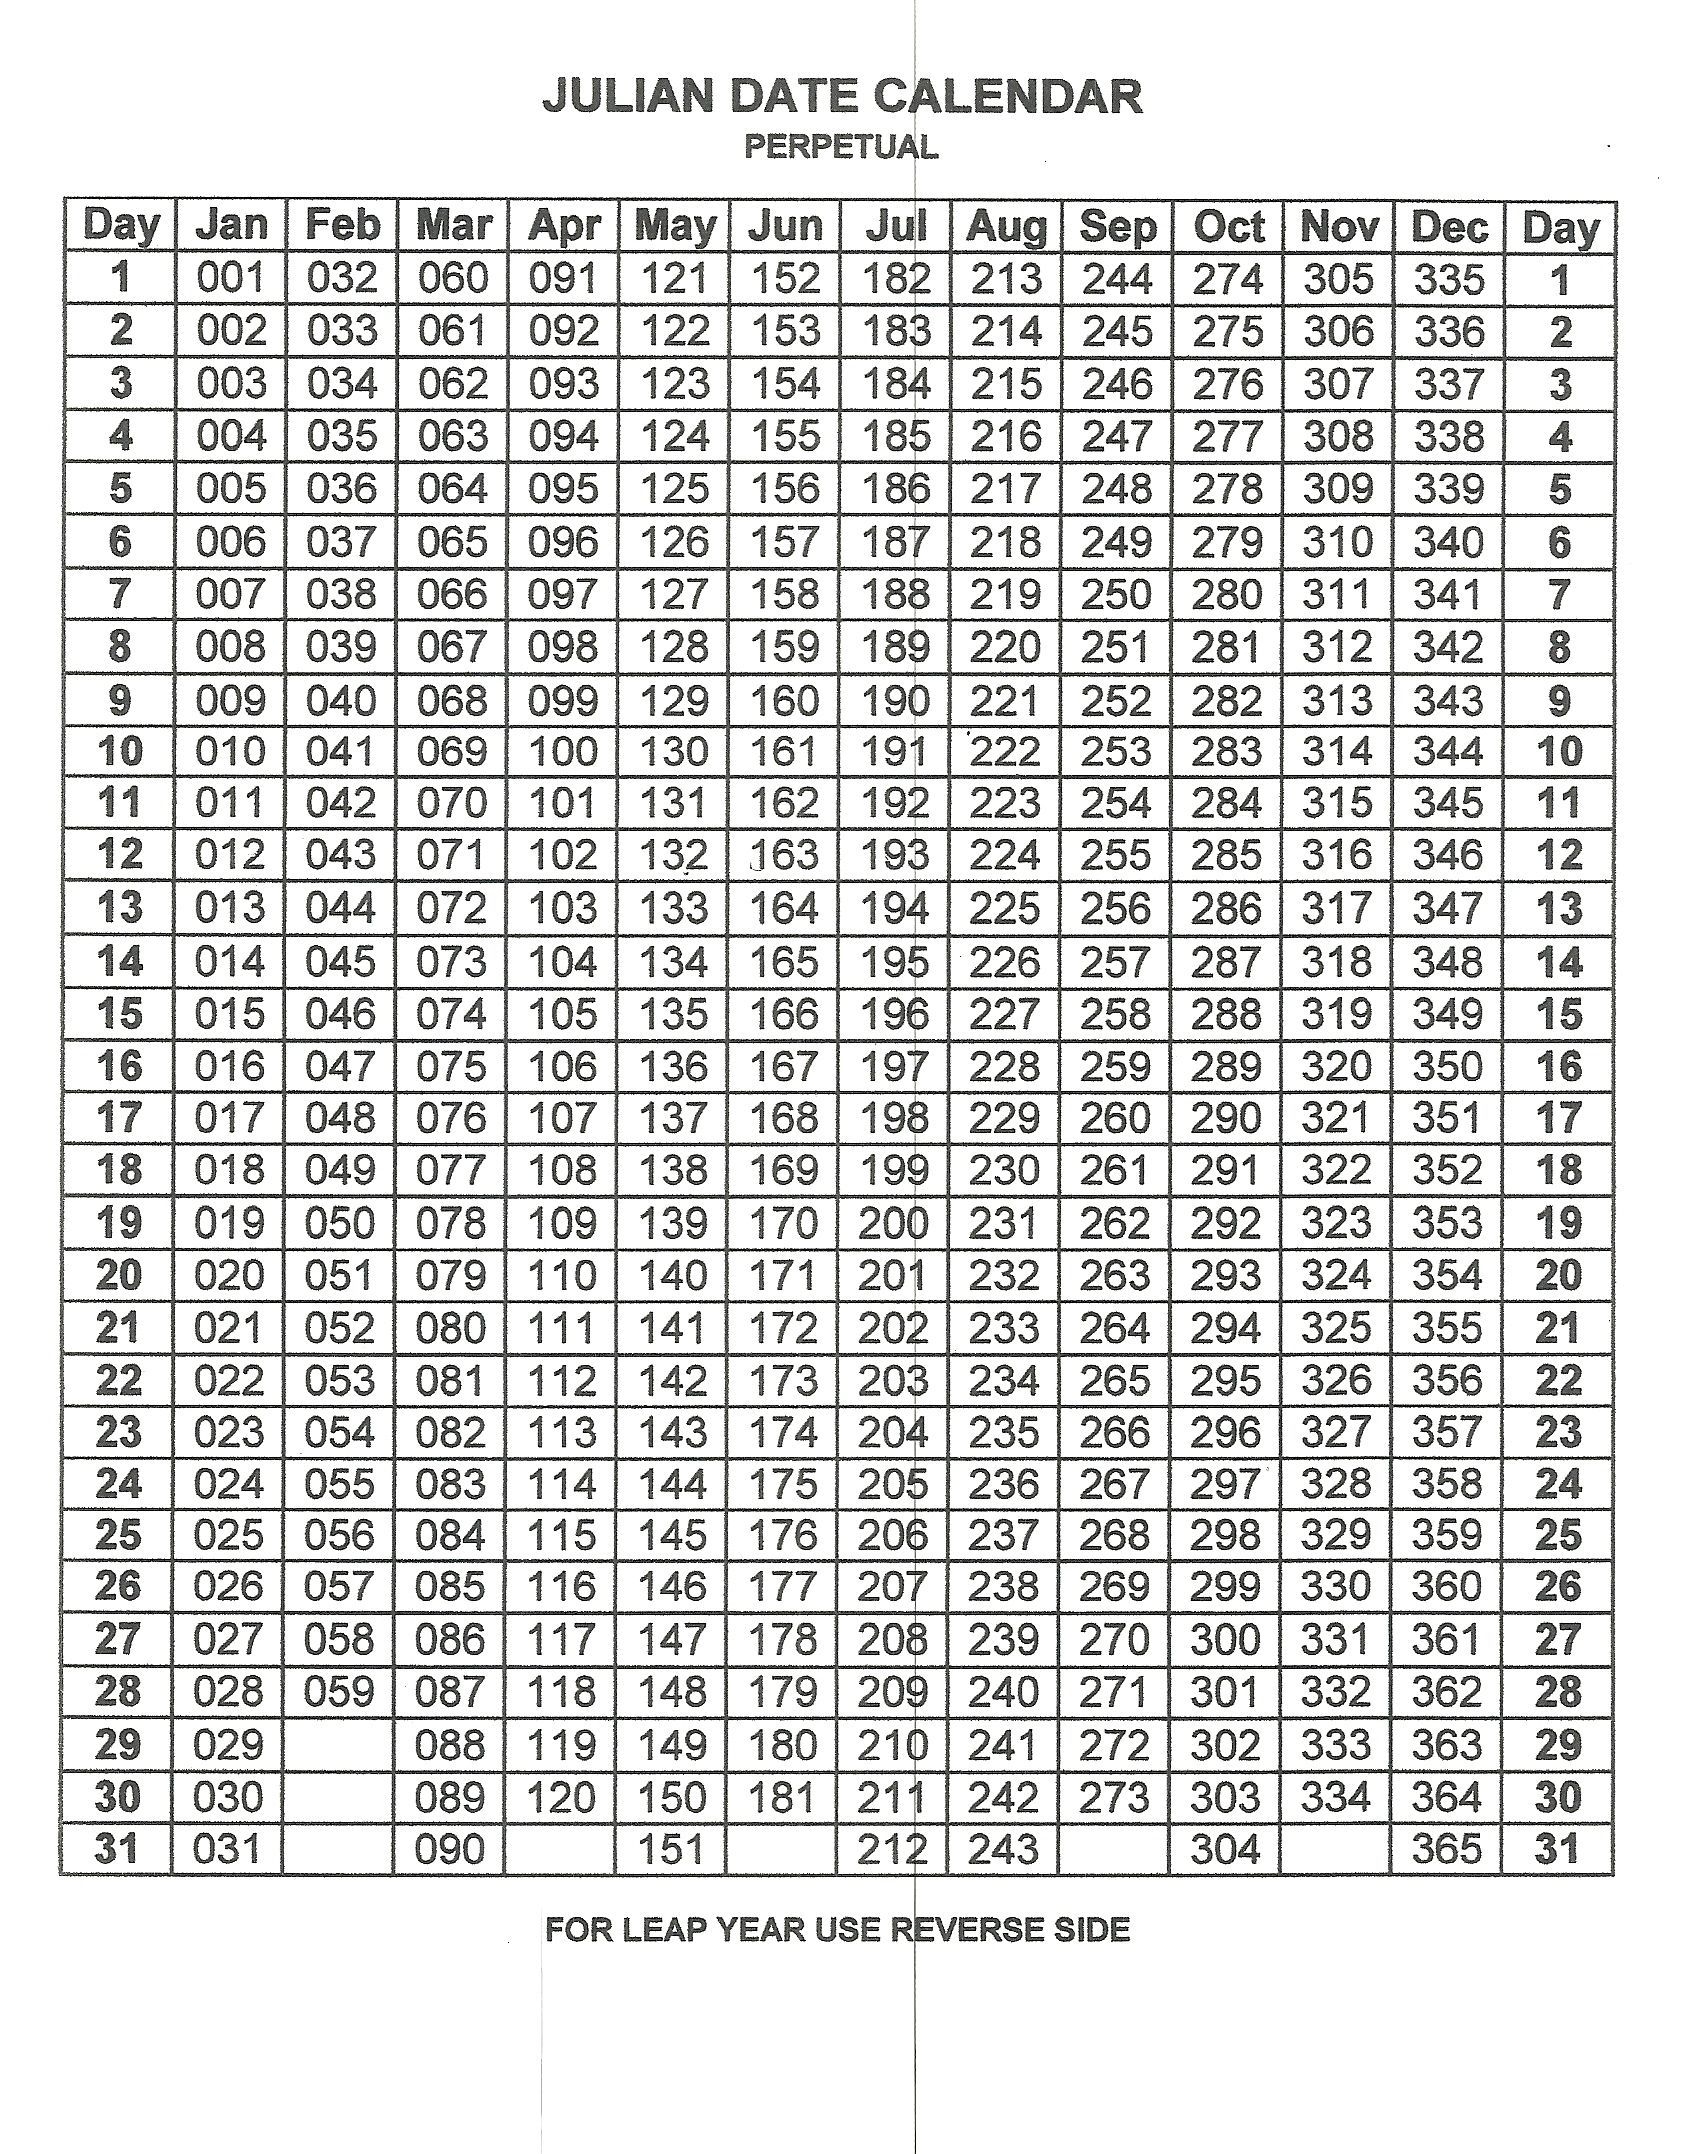 Perpetual Julian Date Calendar | Julian Dates, Calendar